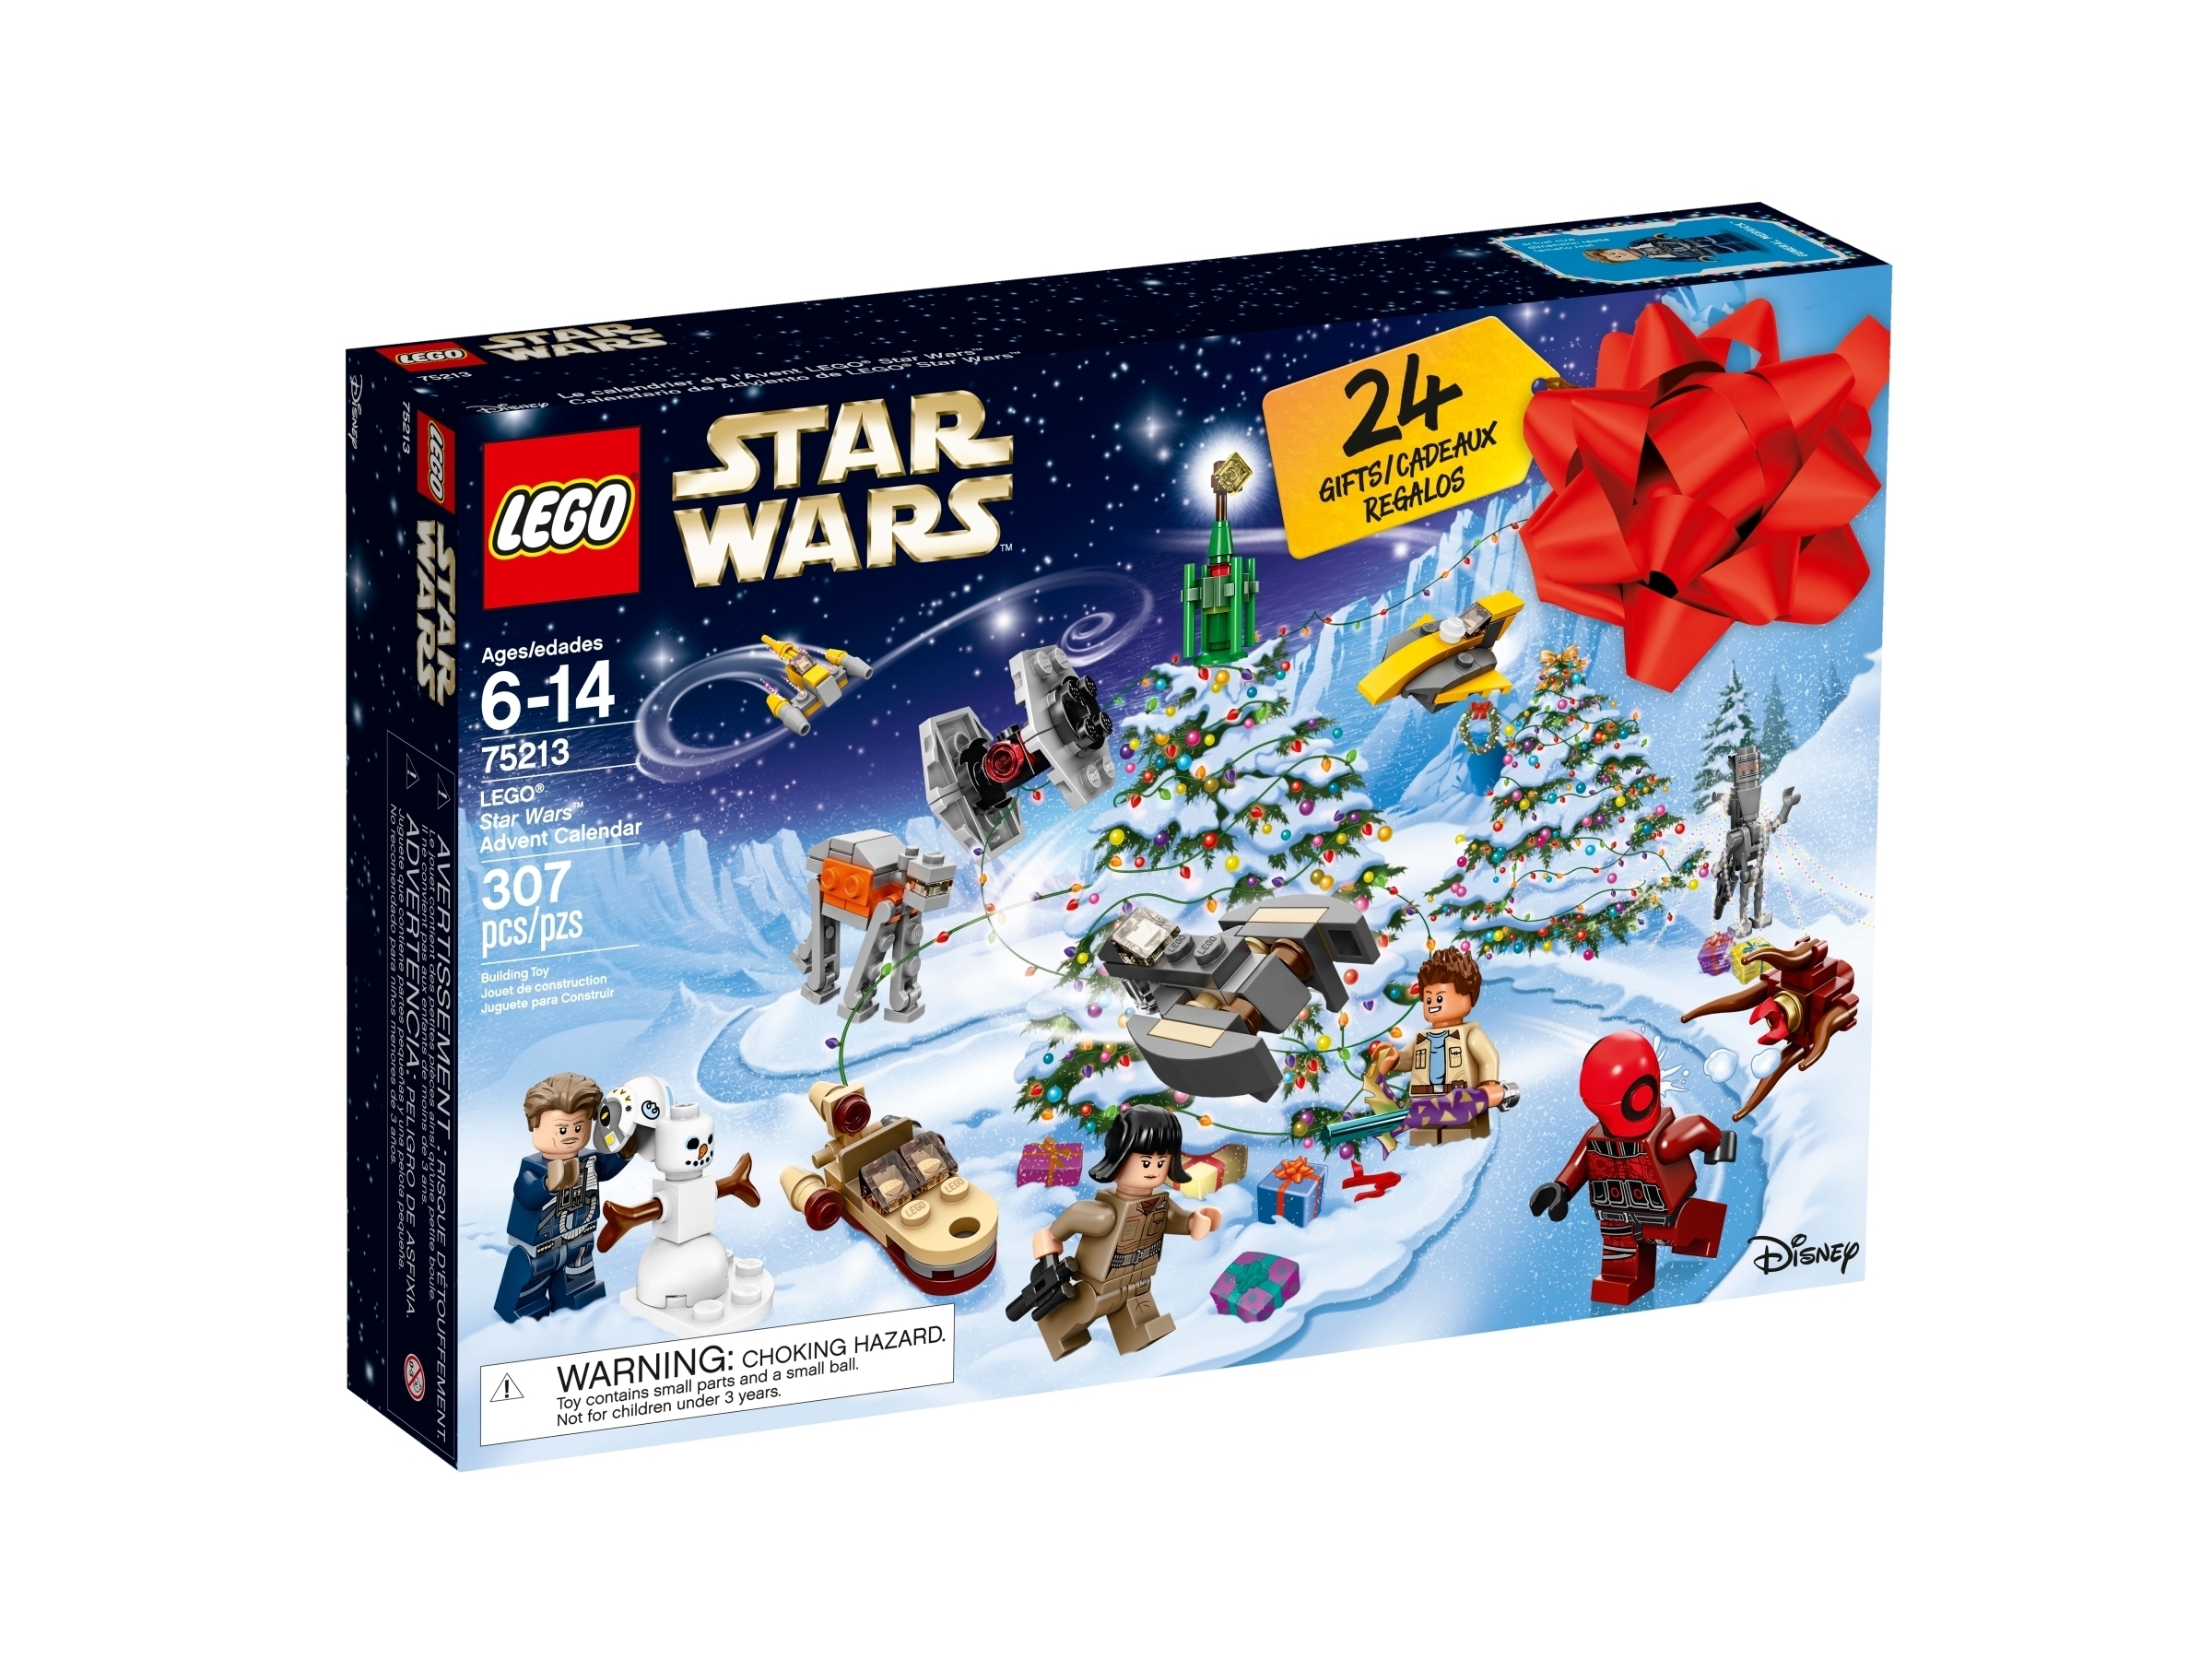 Take Lego Star Wars Advent Calendar 2021 Instructions